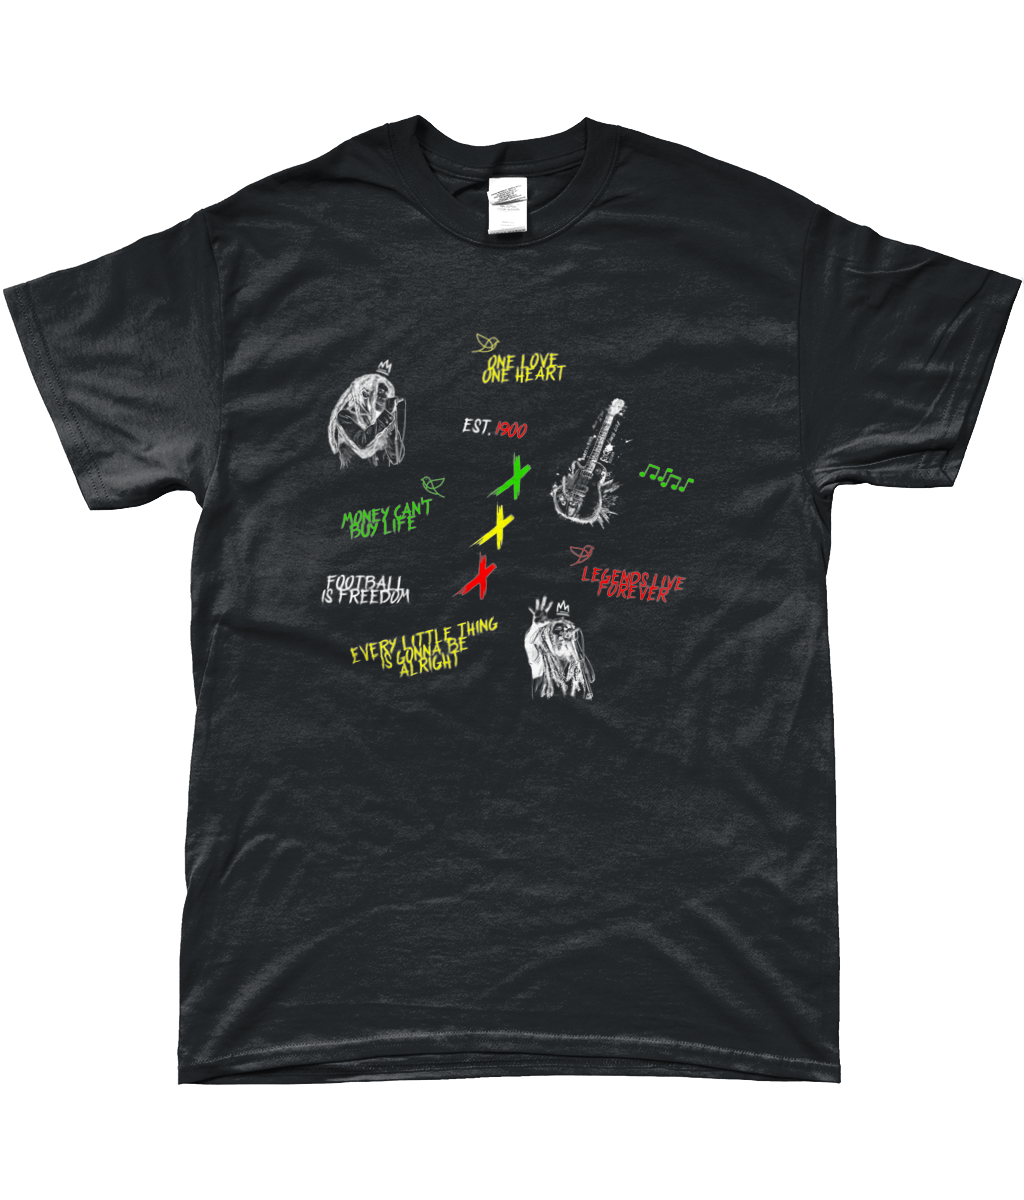 Ajax - Bob Marley 2 T-shirt